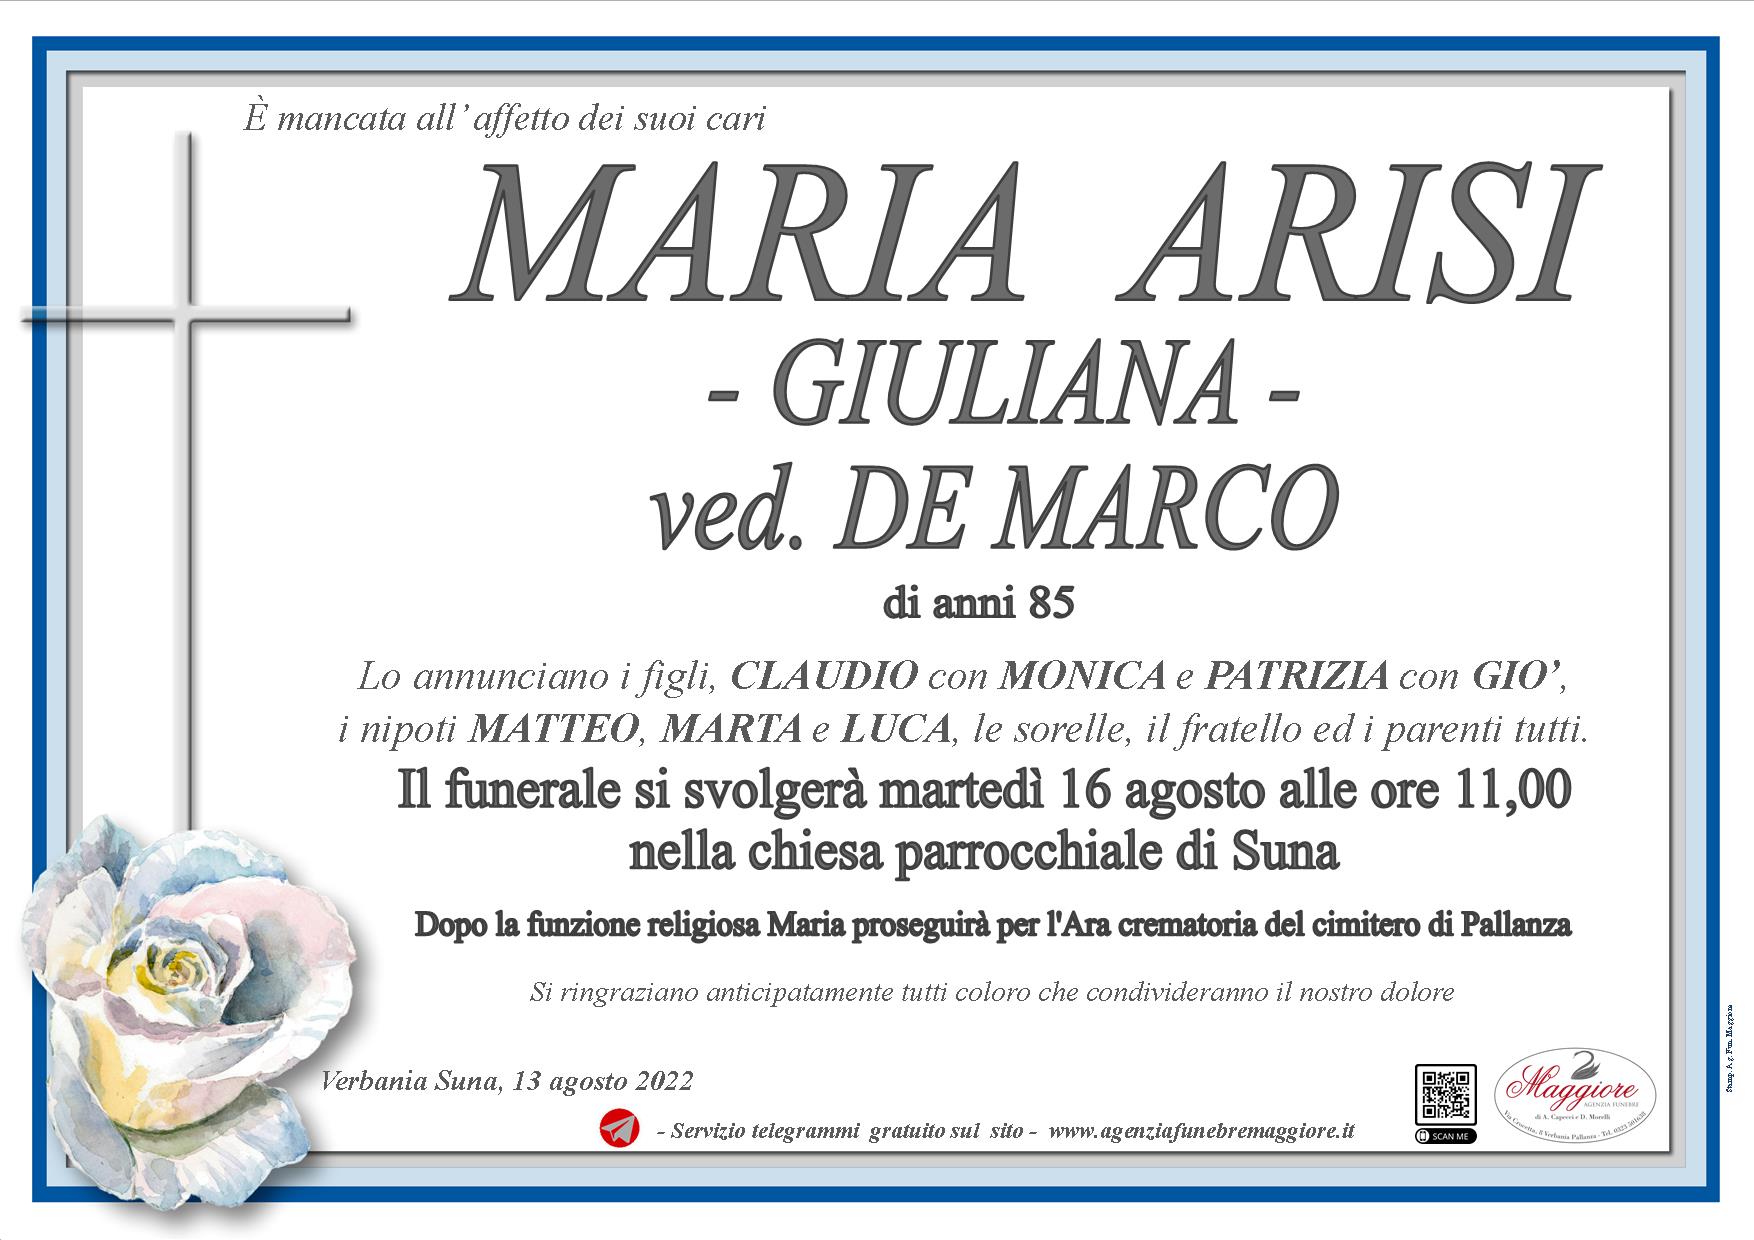 Maria  – Giuliana – Arisi ved. De Marco